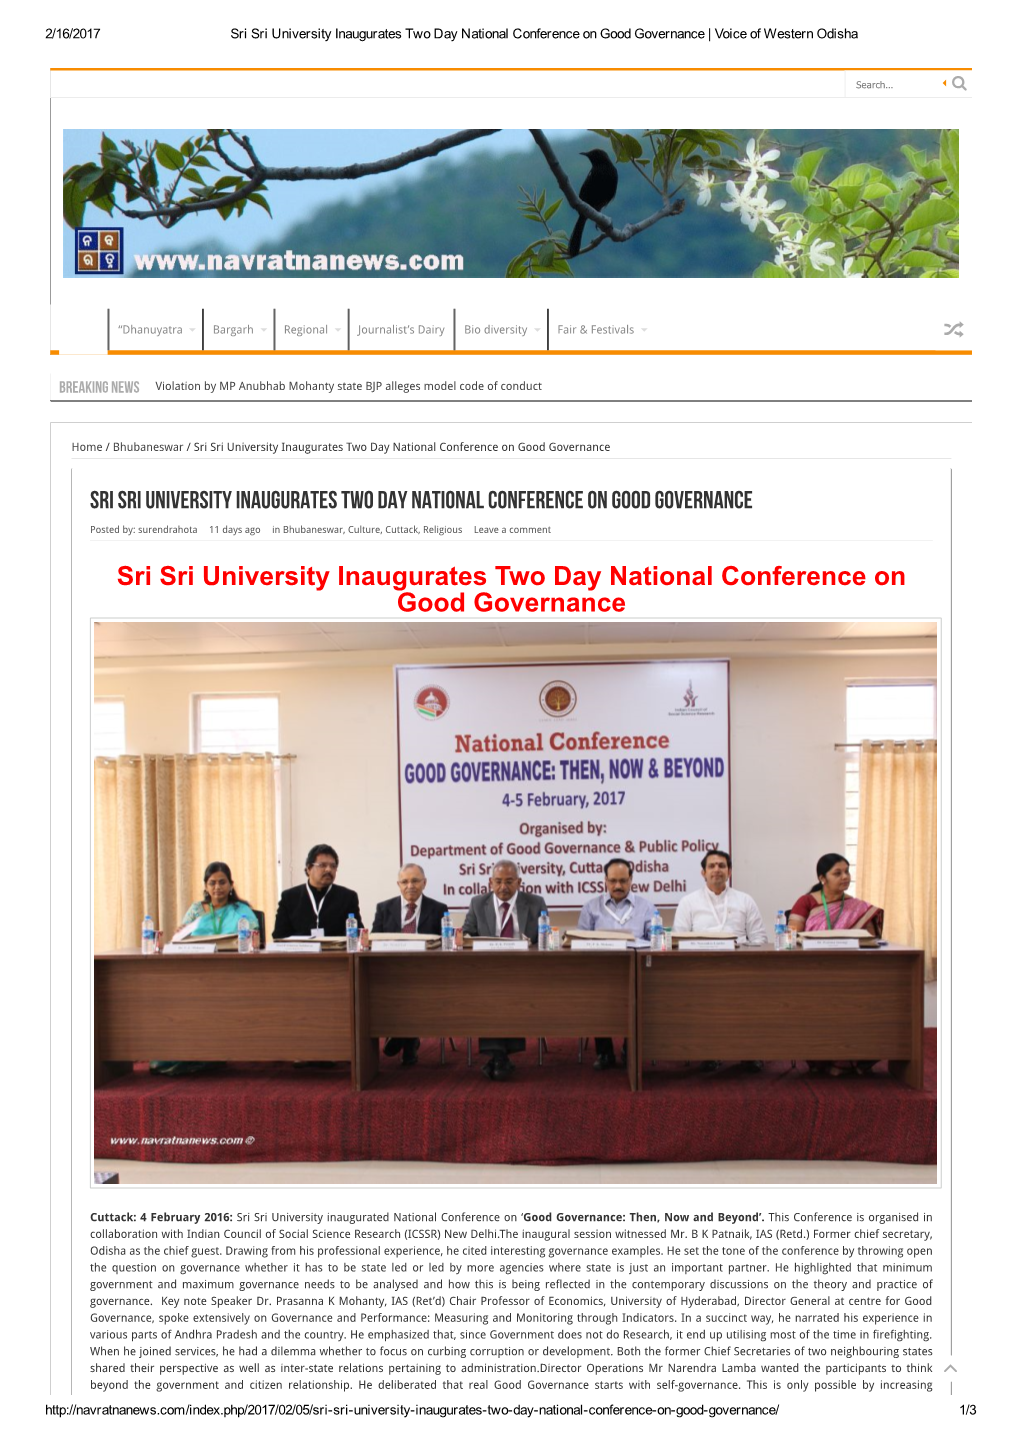 Sri Sri University Inaugurates Two Day National Conference on Good Governance | Voice of Western Odisha